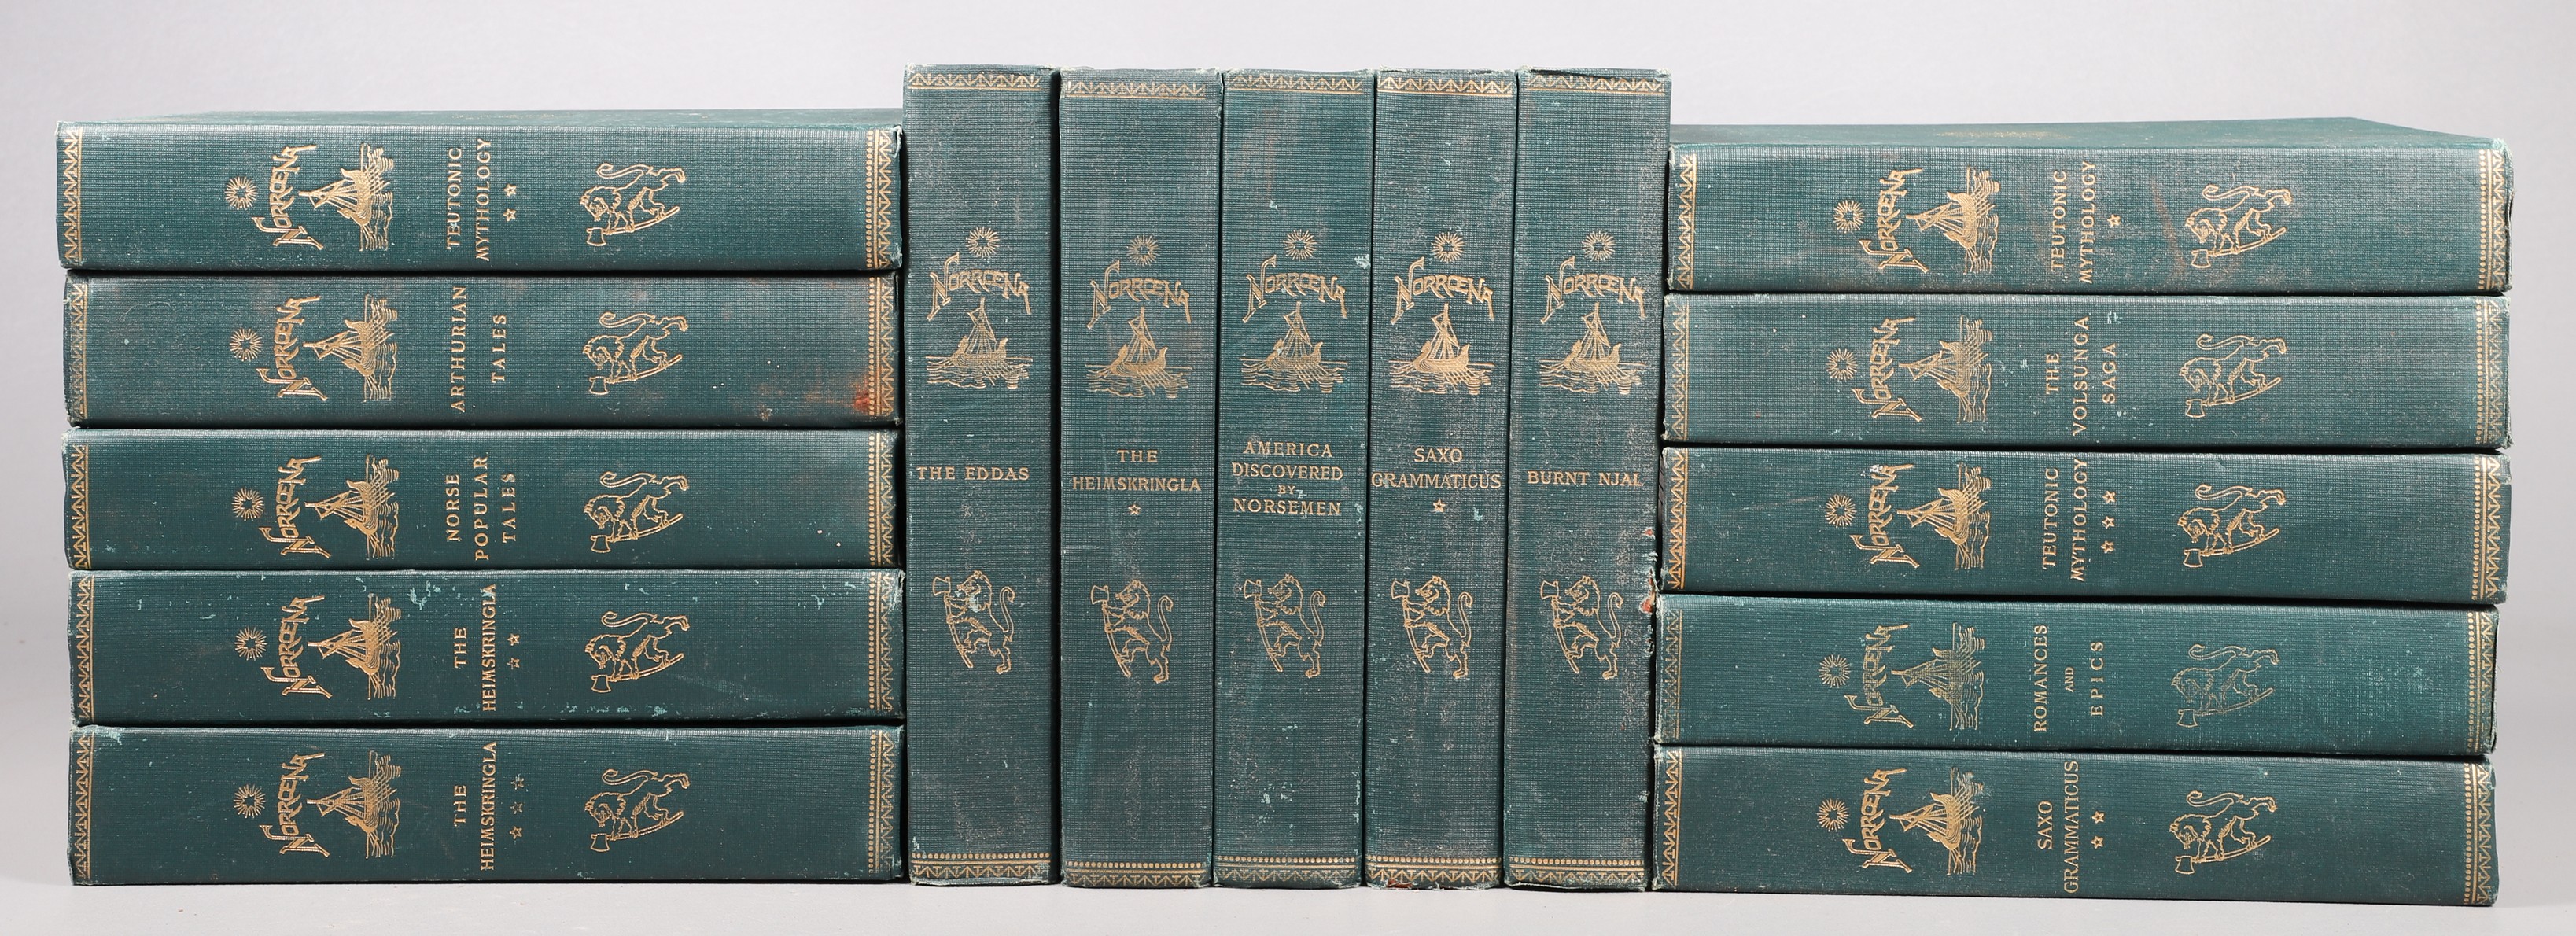 A fifteen-volume set titled Norroena